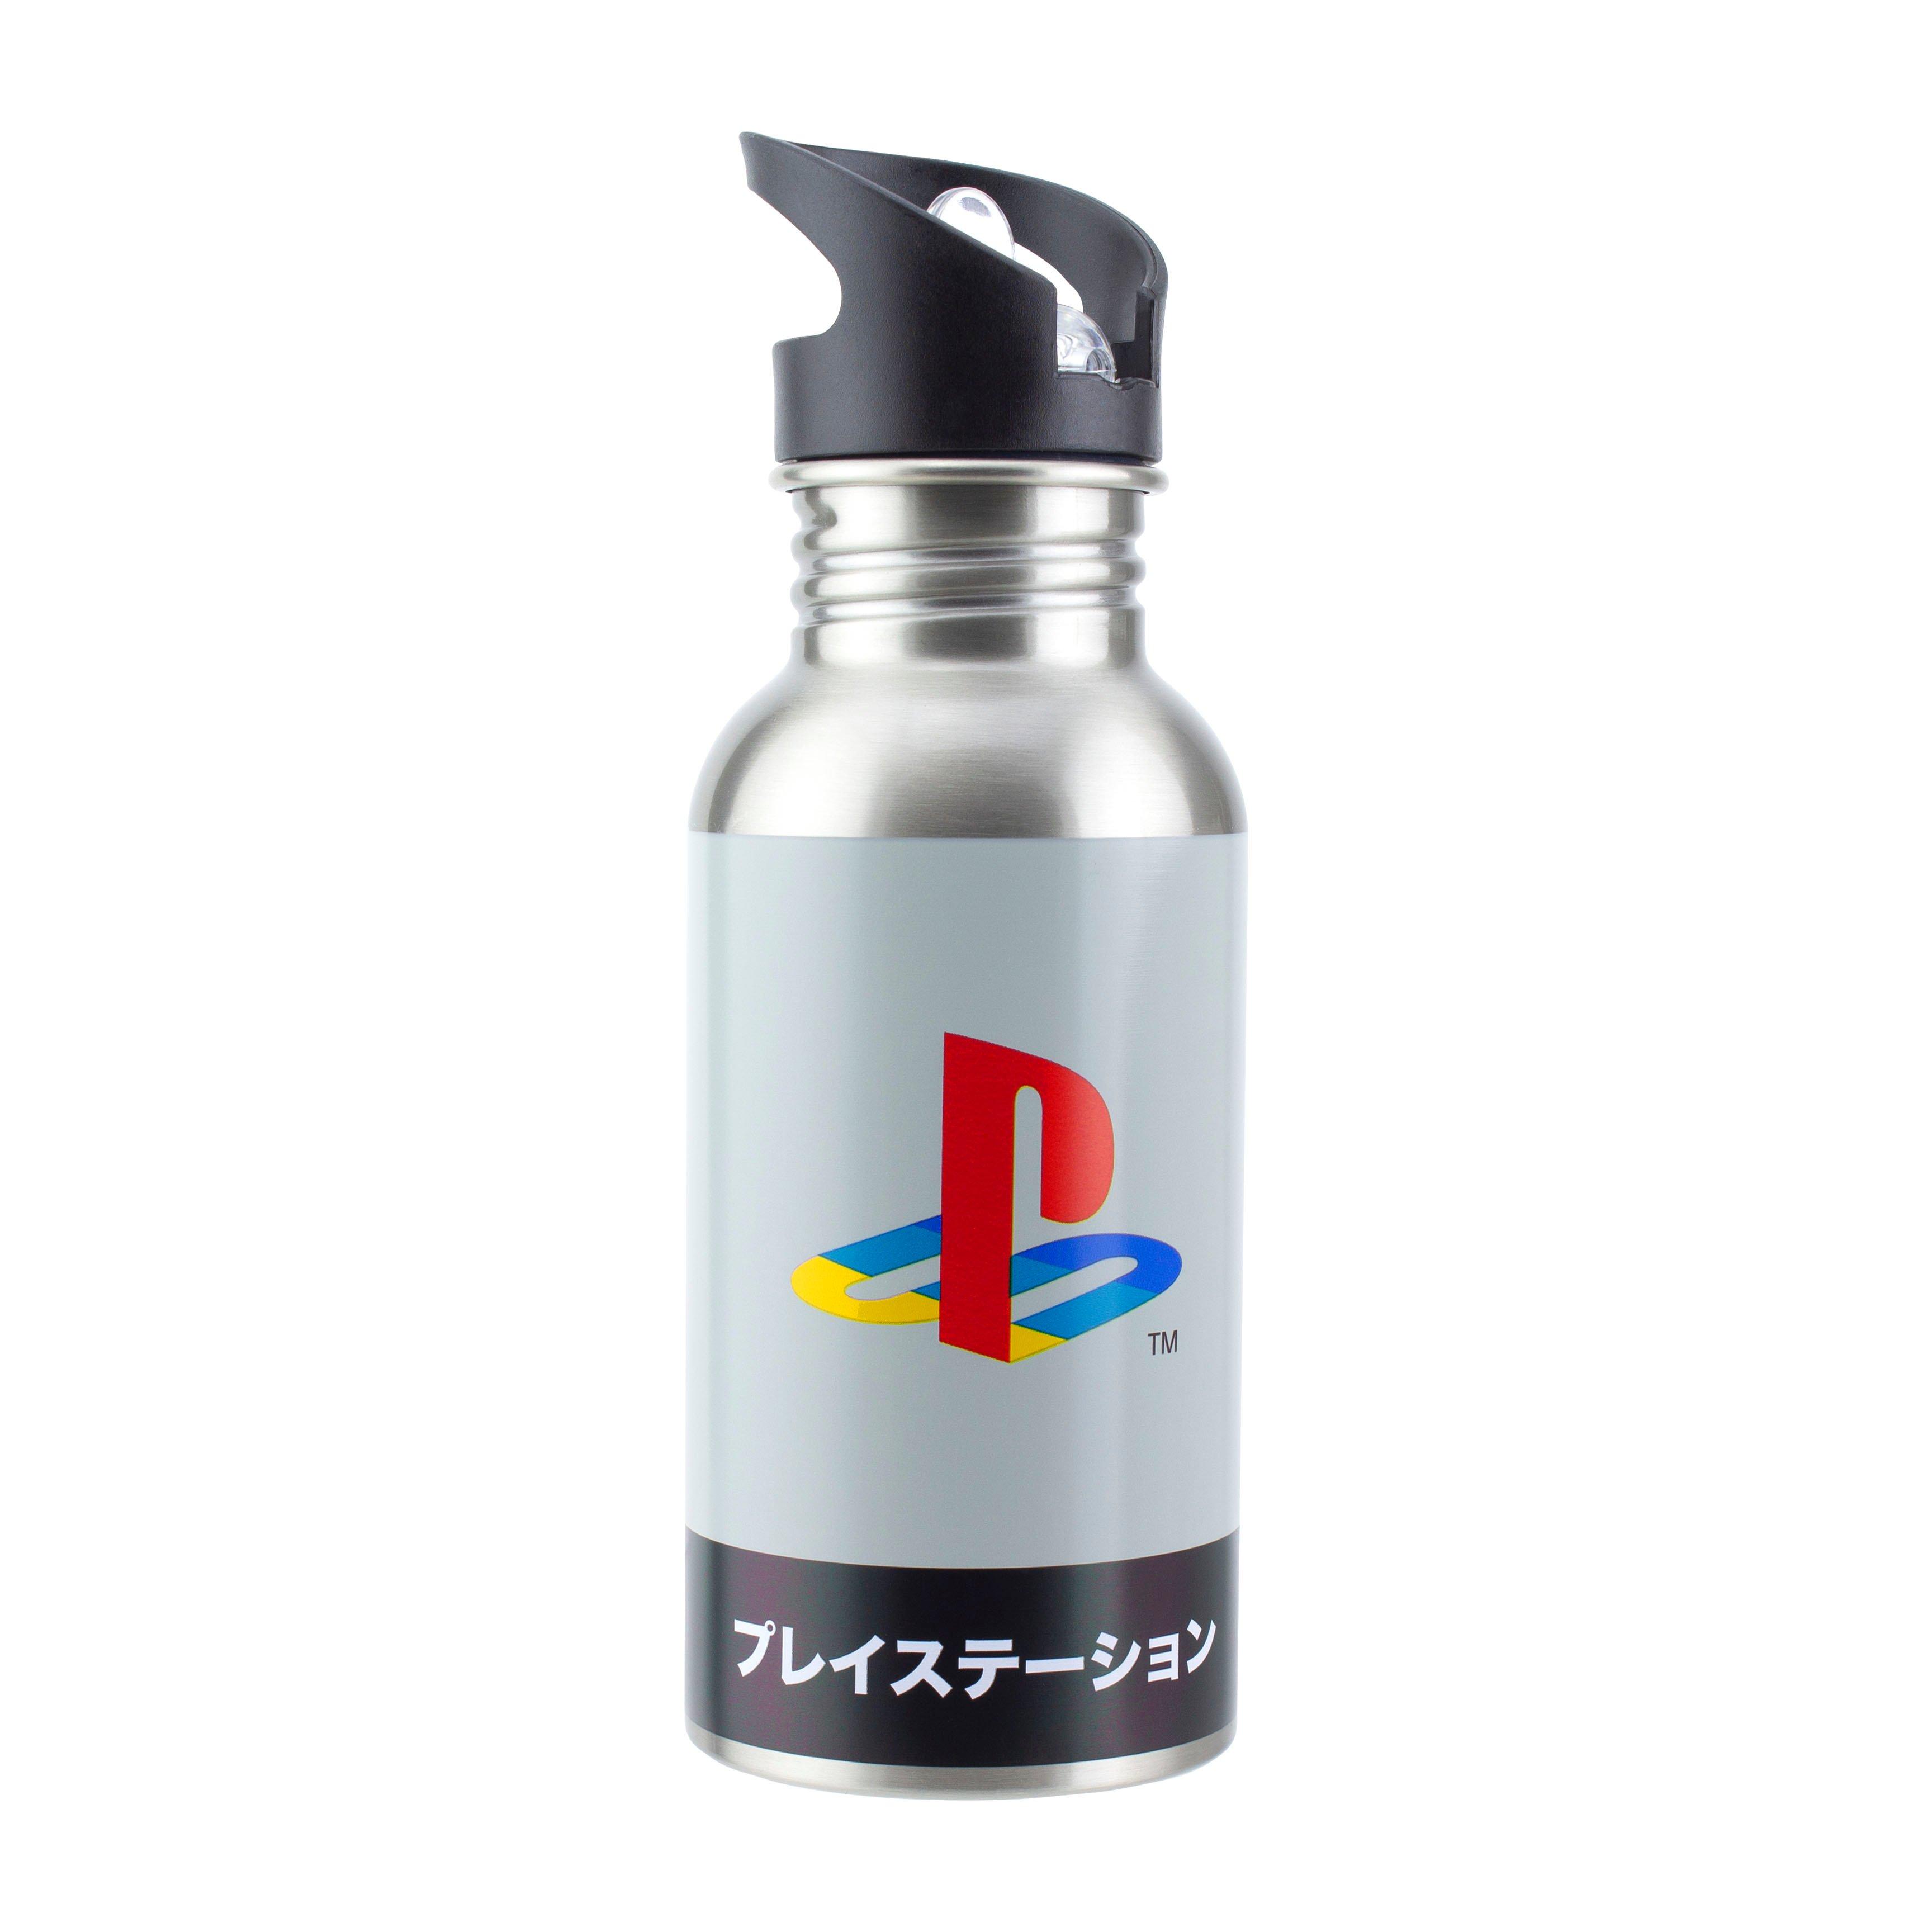 https://media.gamestop.com/i/gamestop/11165657/Playstation-Heritage-Metal-Water-Bottle-with-Straw